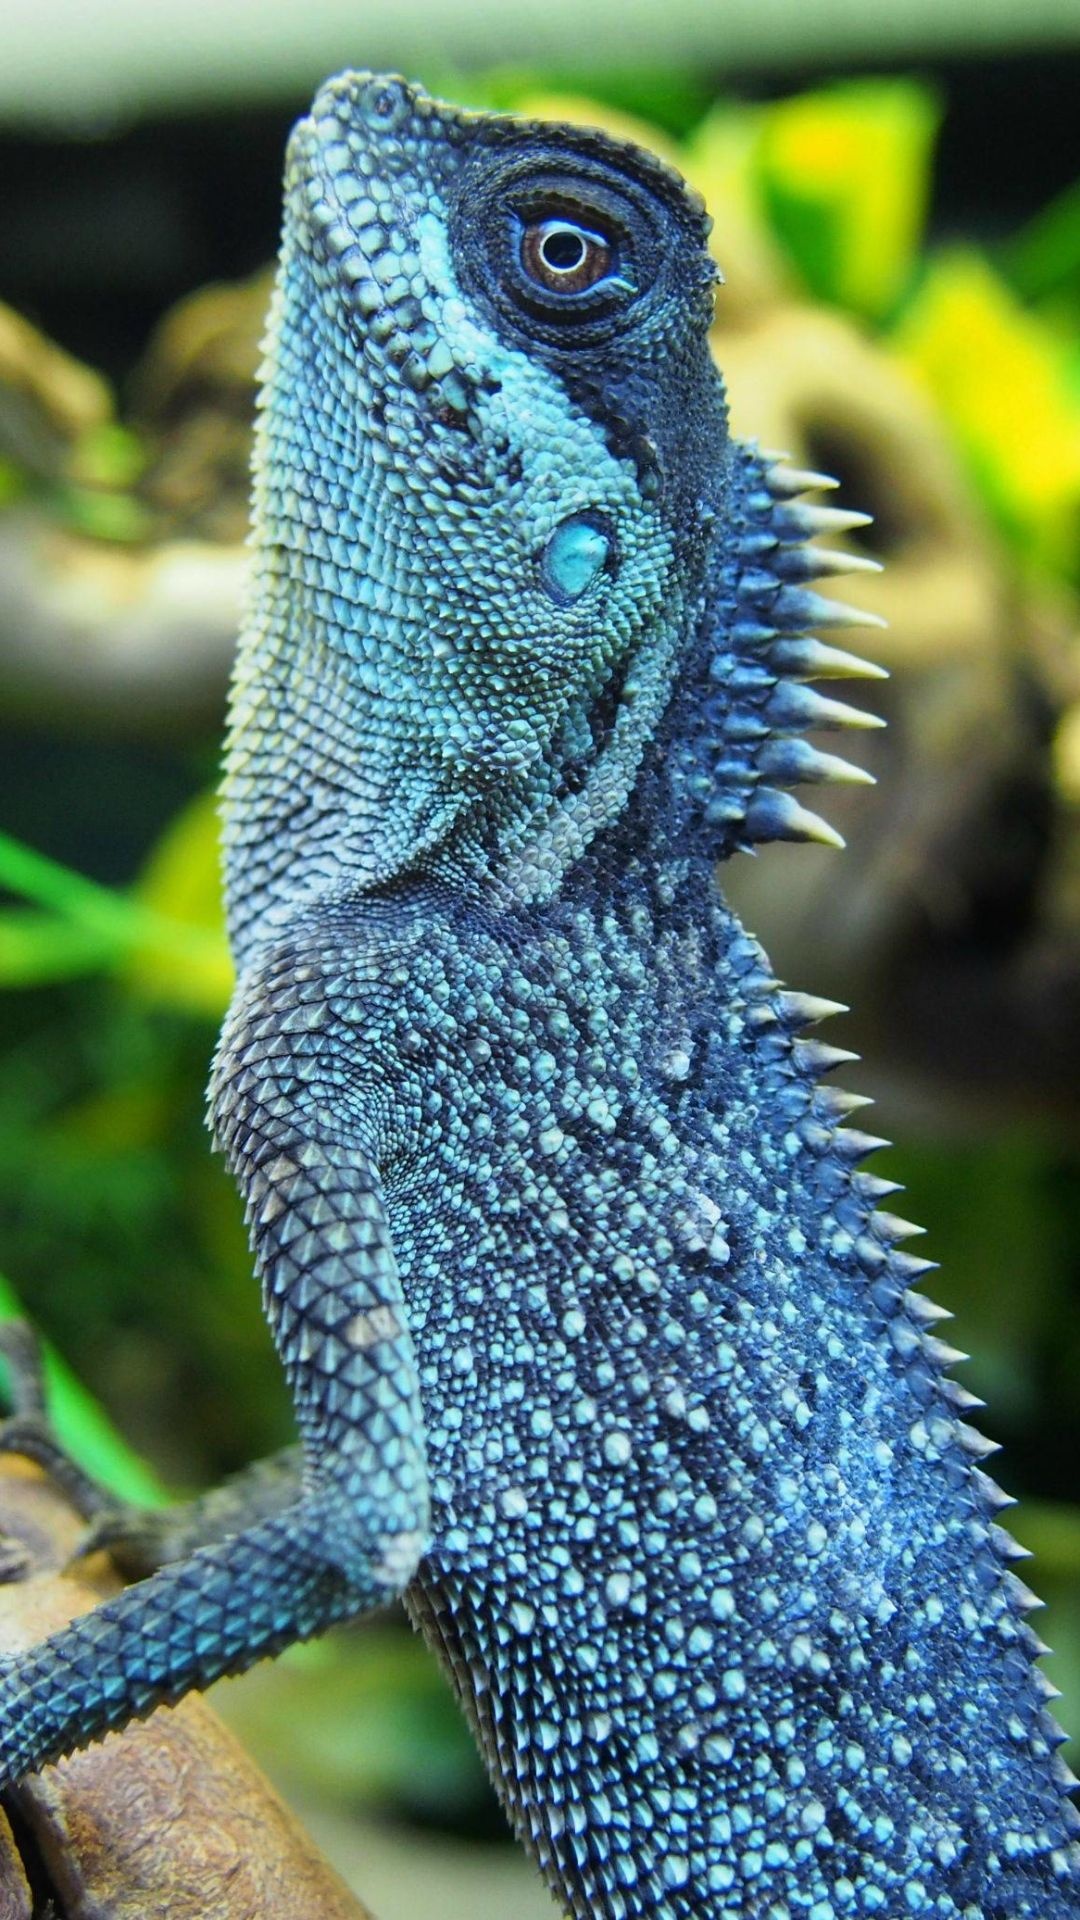 Lizard, Reptile species, Mobile wallpaper, Colorful wildlife, 1080x1920 Full HD Handy